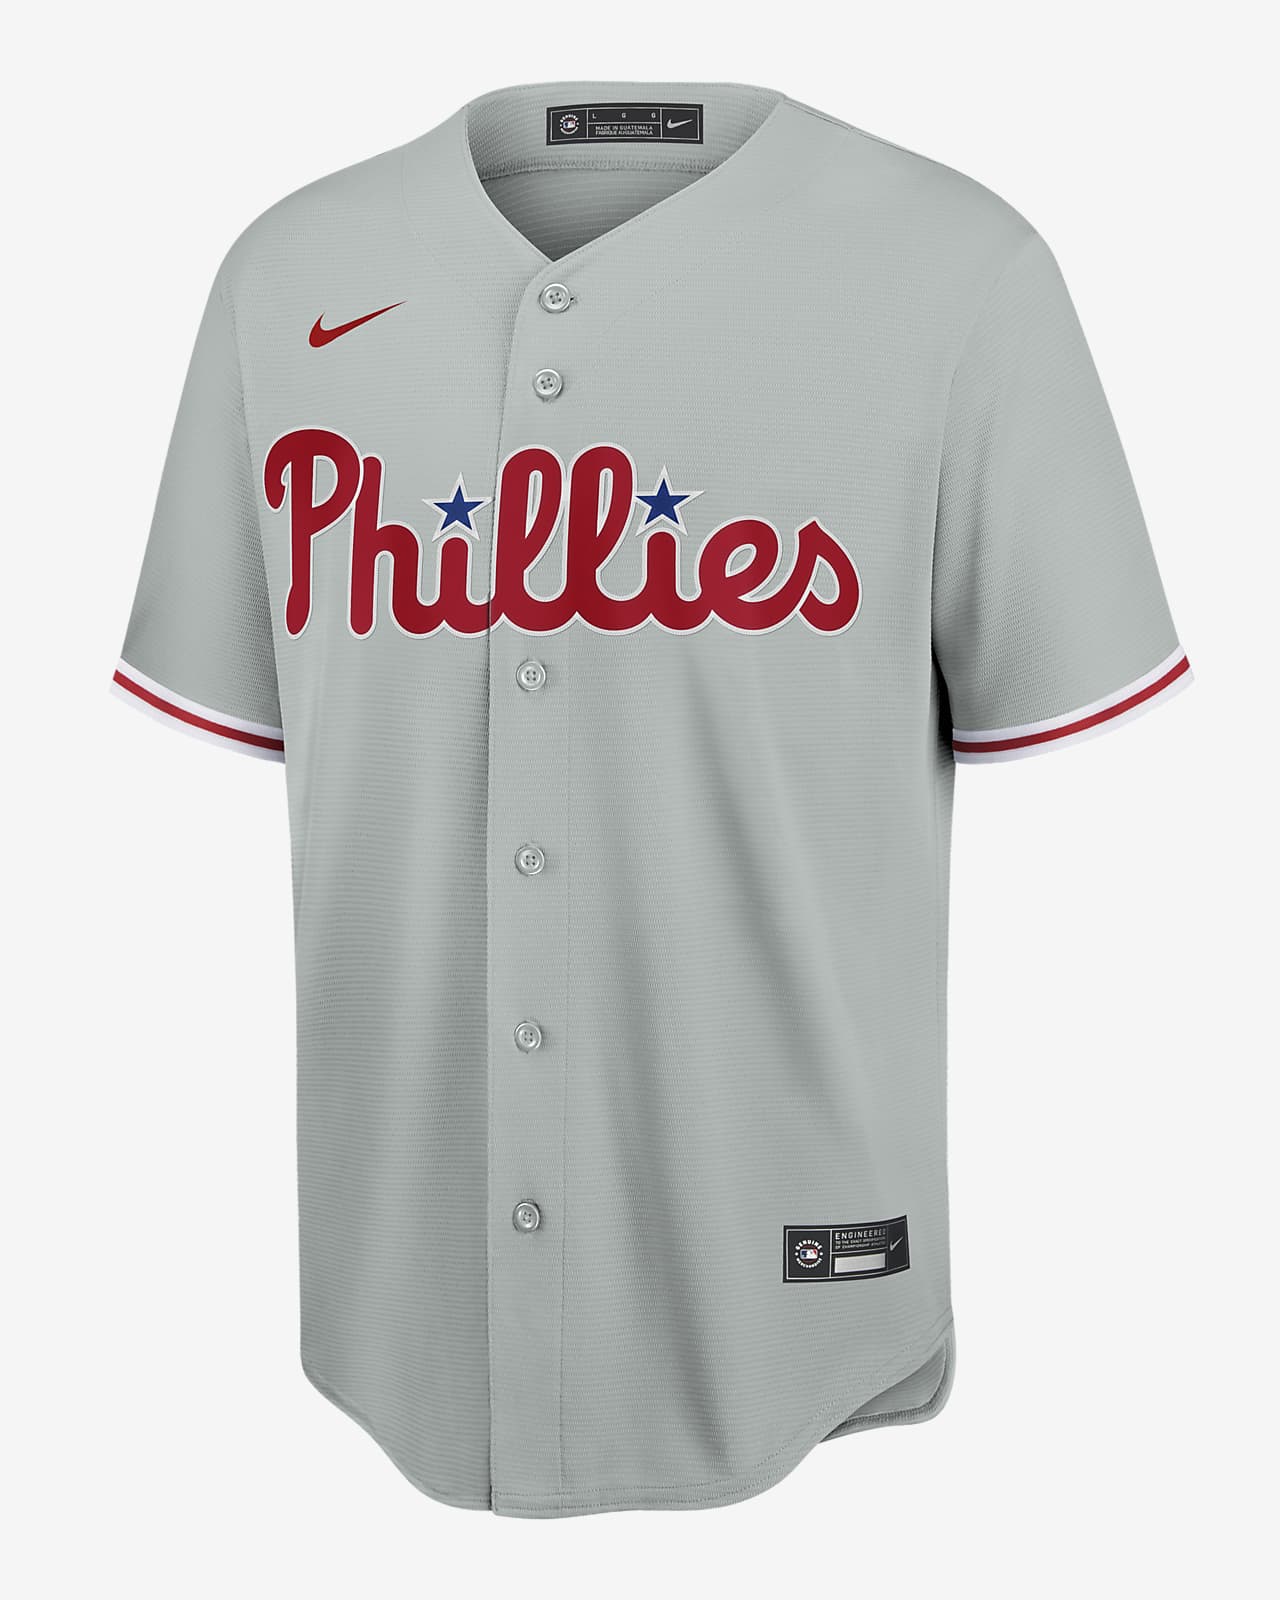 MLB Philadelphia Phillies Men's Replica Baseball Jersey